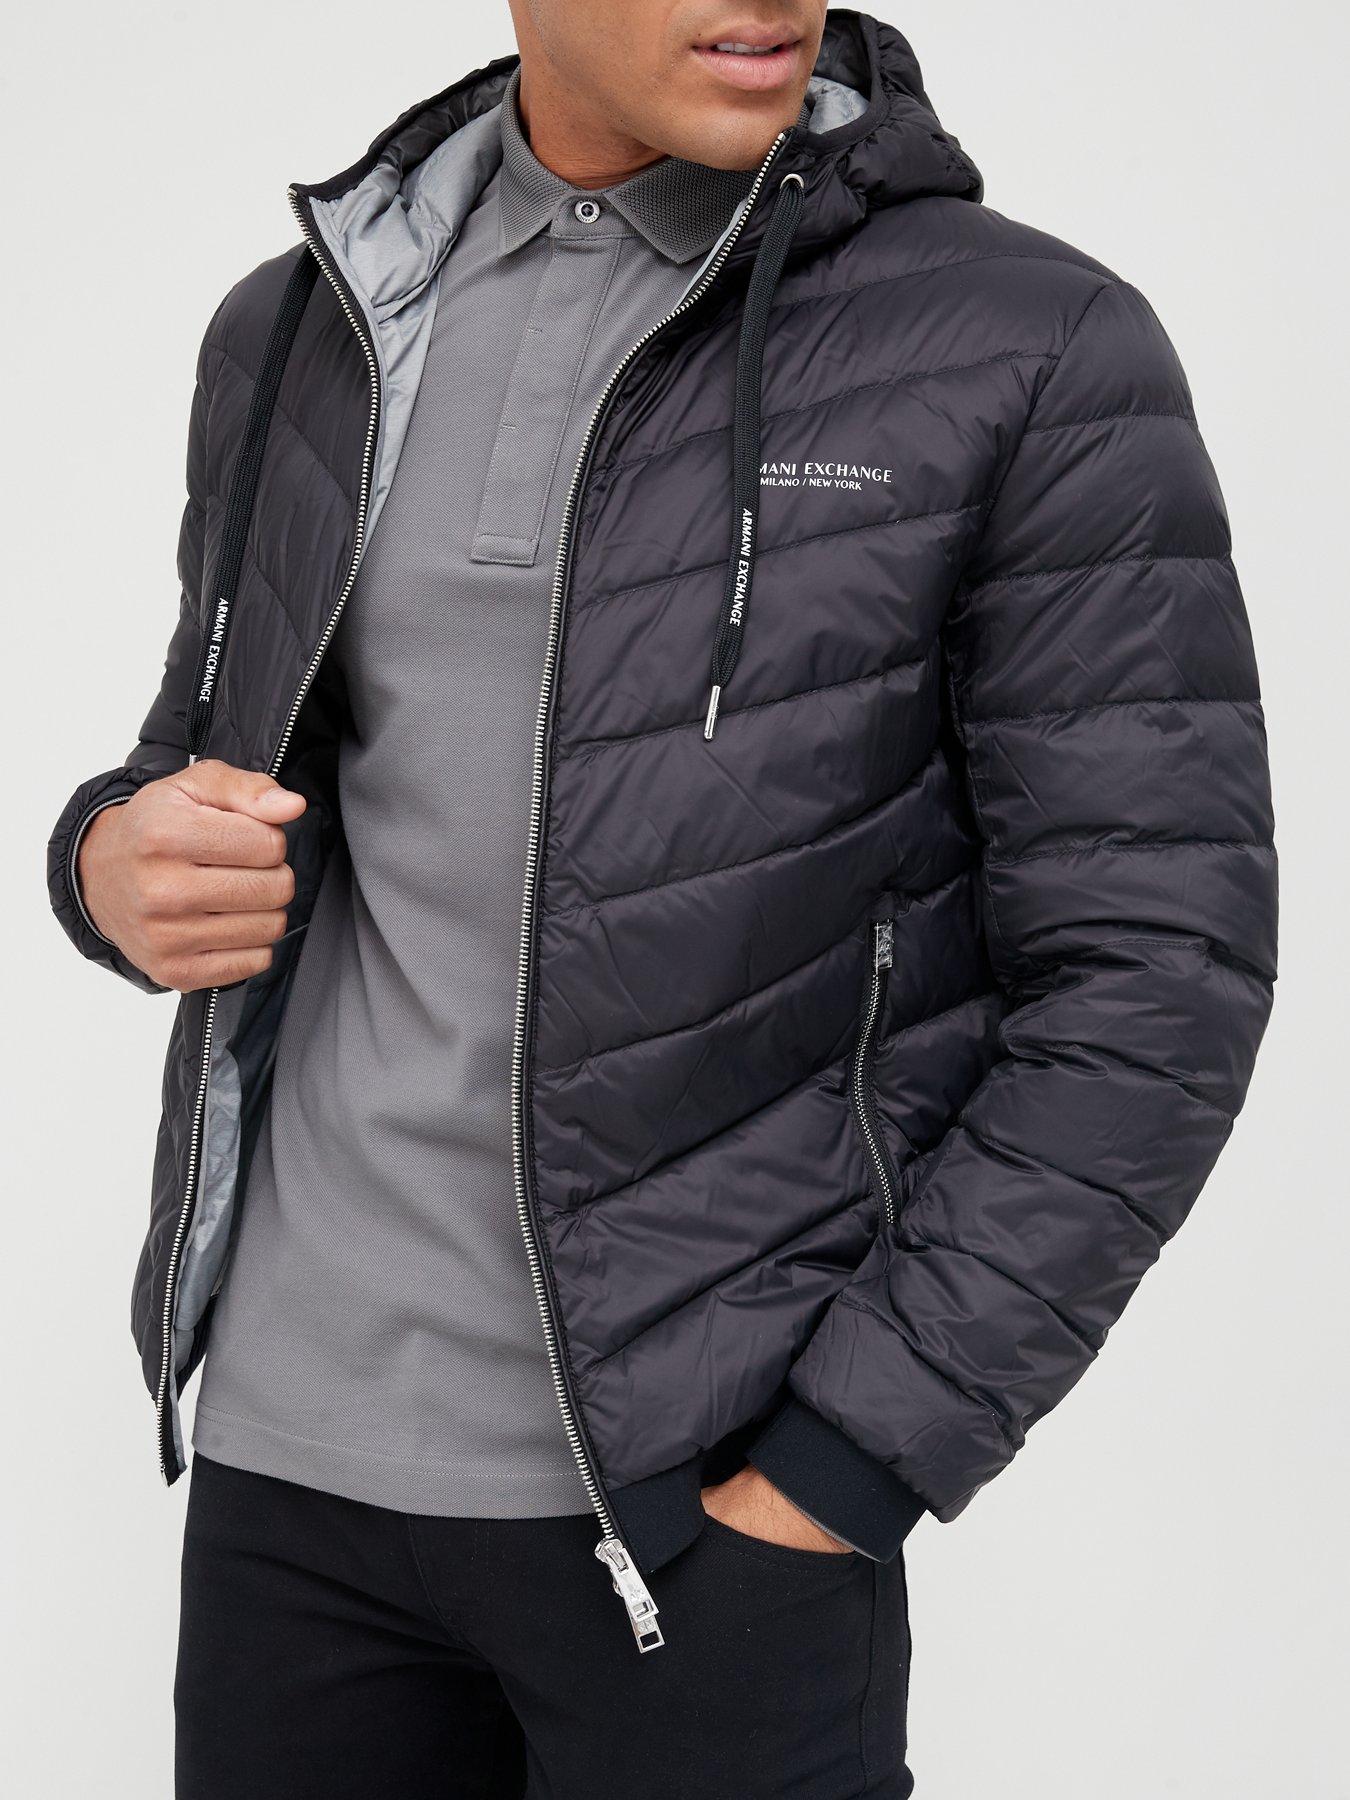 L | Armani exchange | Coats & jackets | Men 